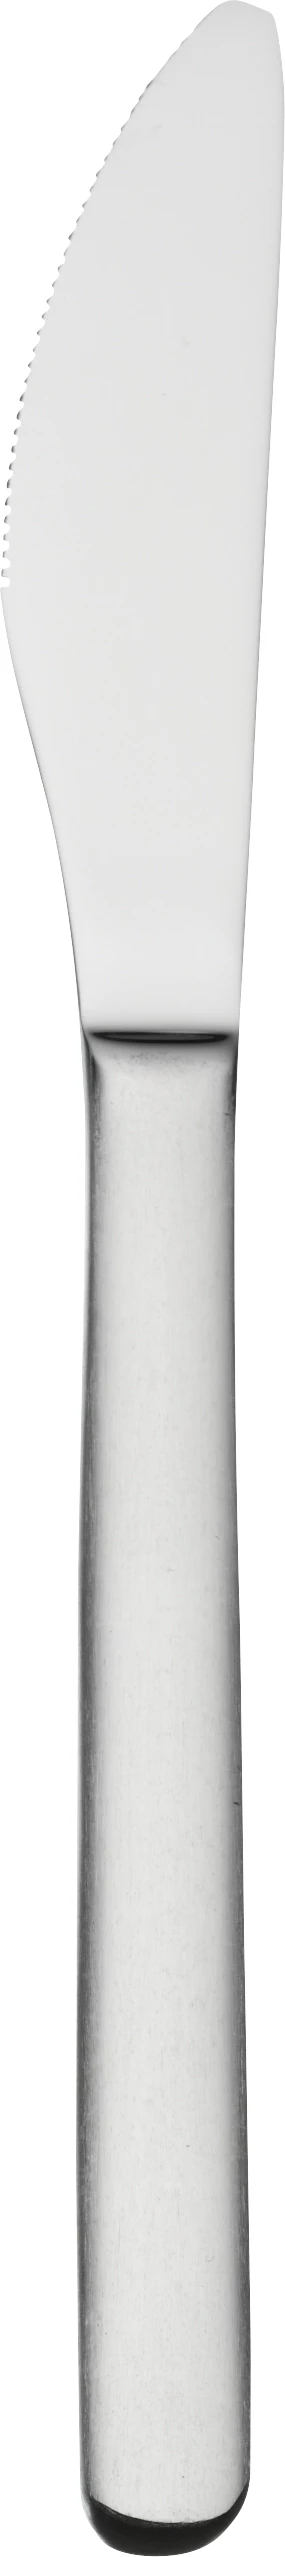 Bornholm bordkniv, 21 cm